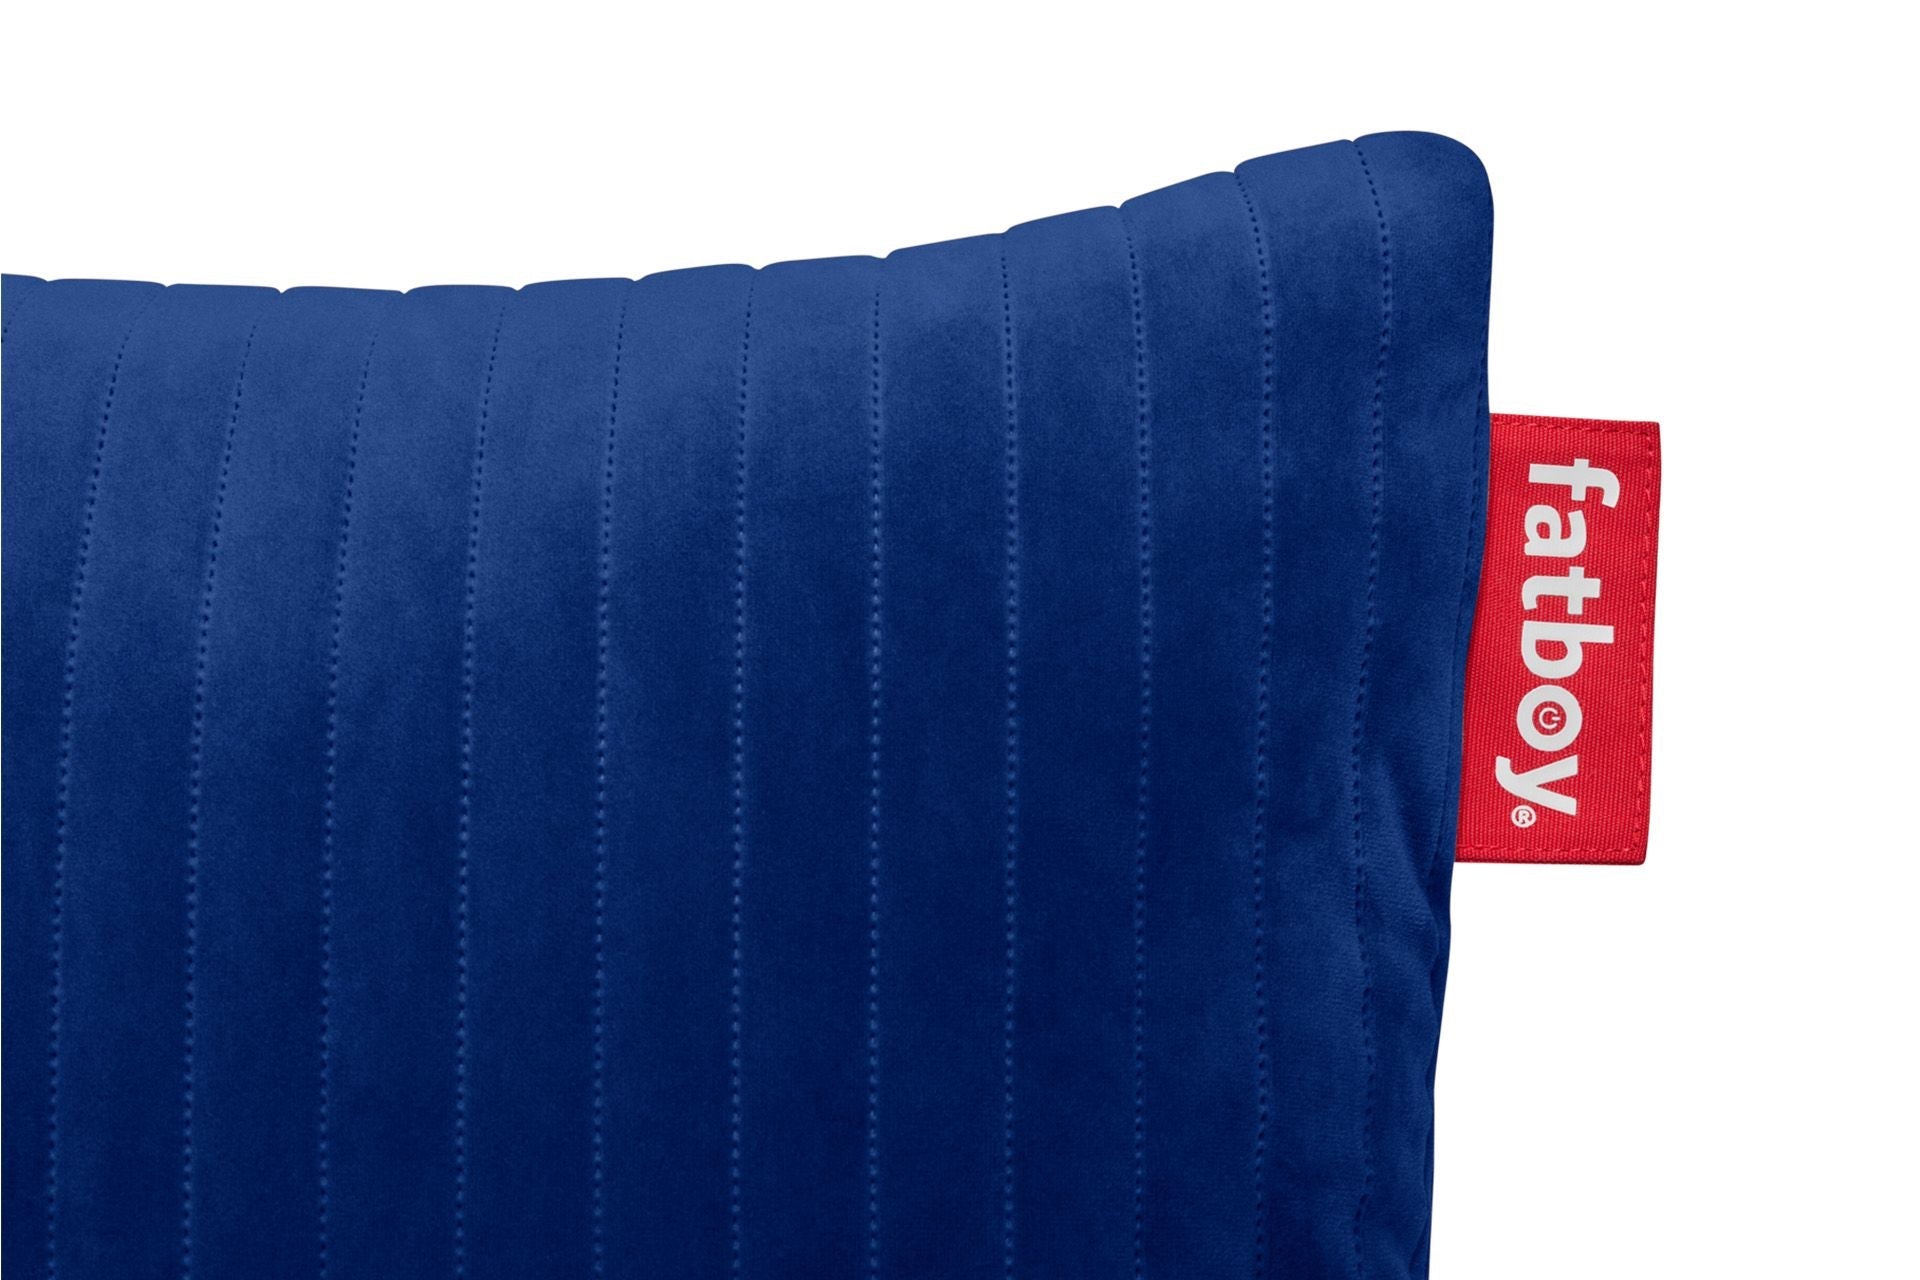 Fatboy Hotspot Quadro Line Velvet Pillow, Flash Blue